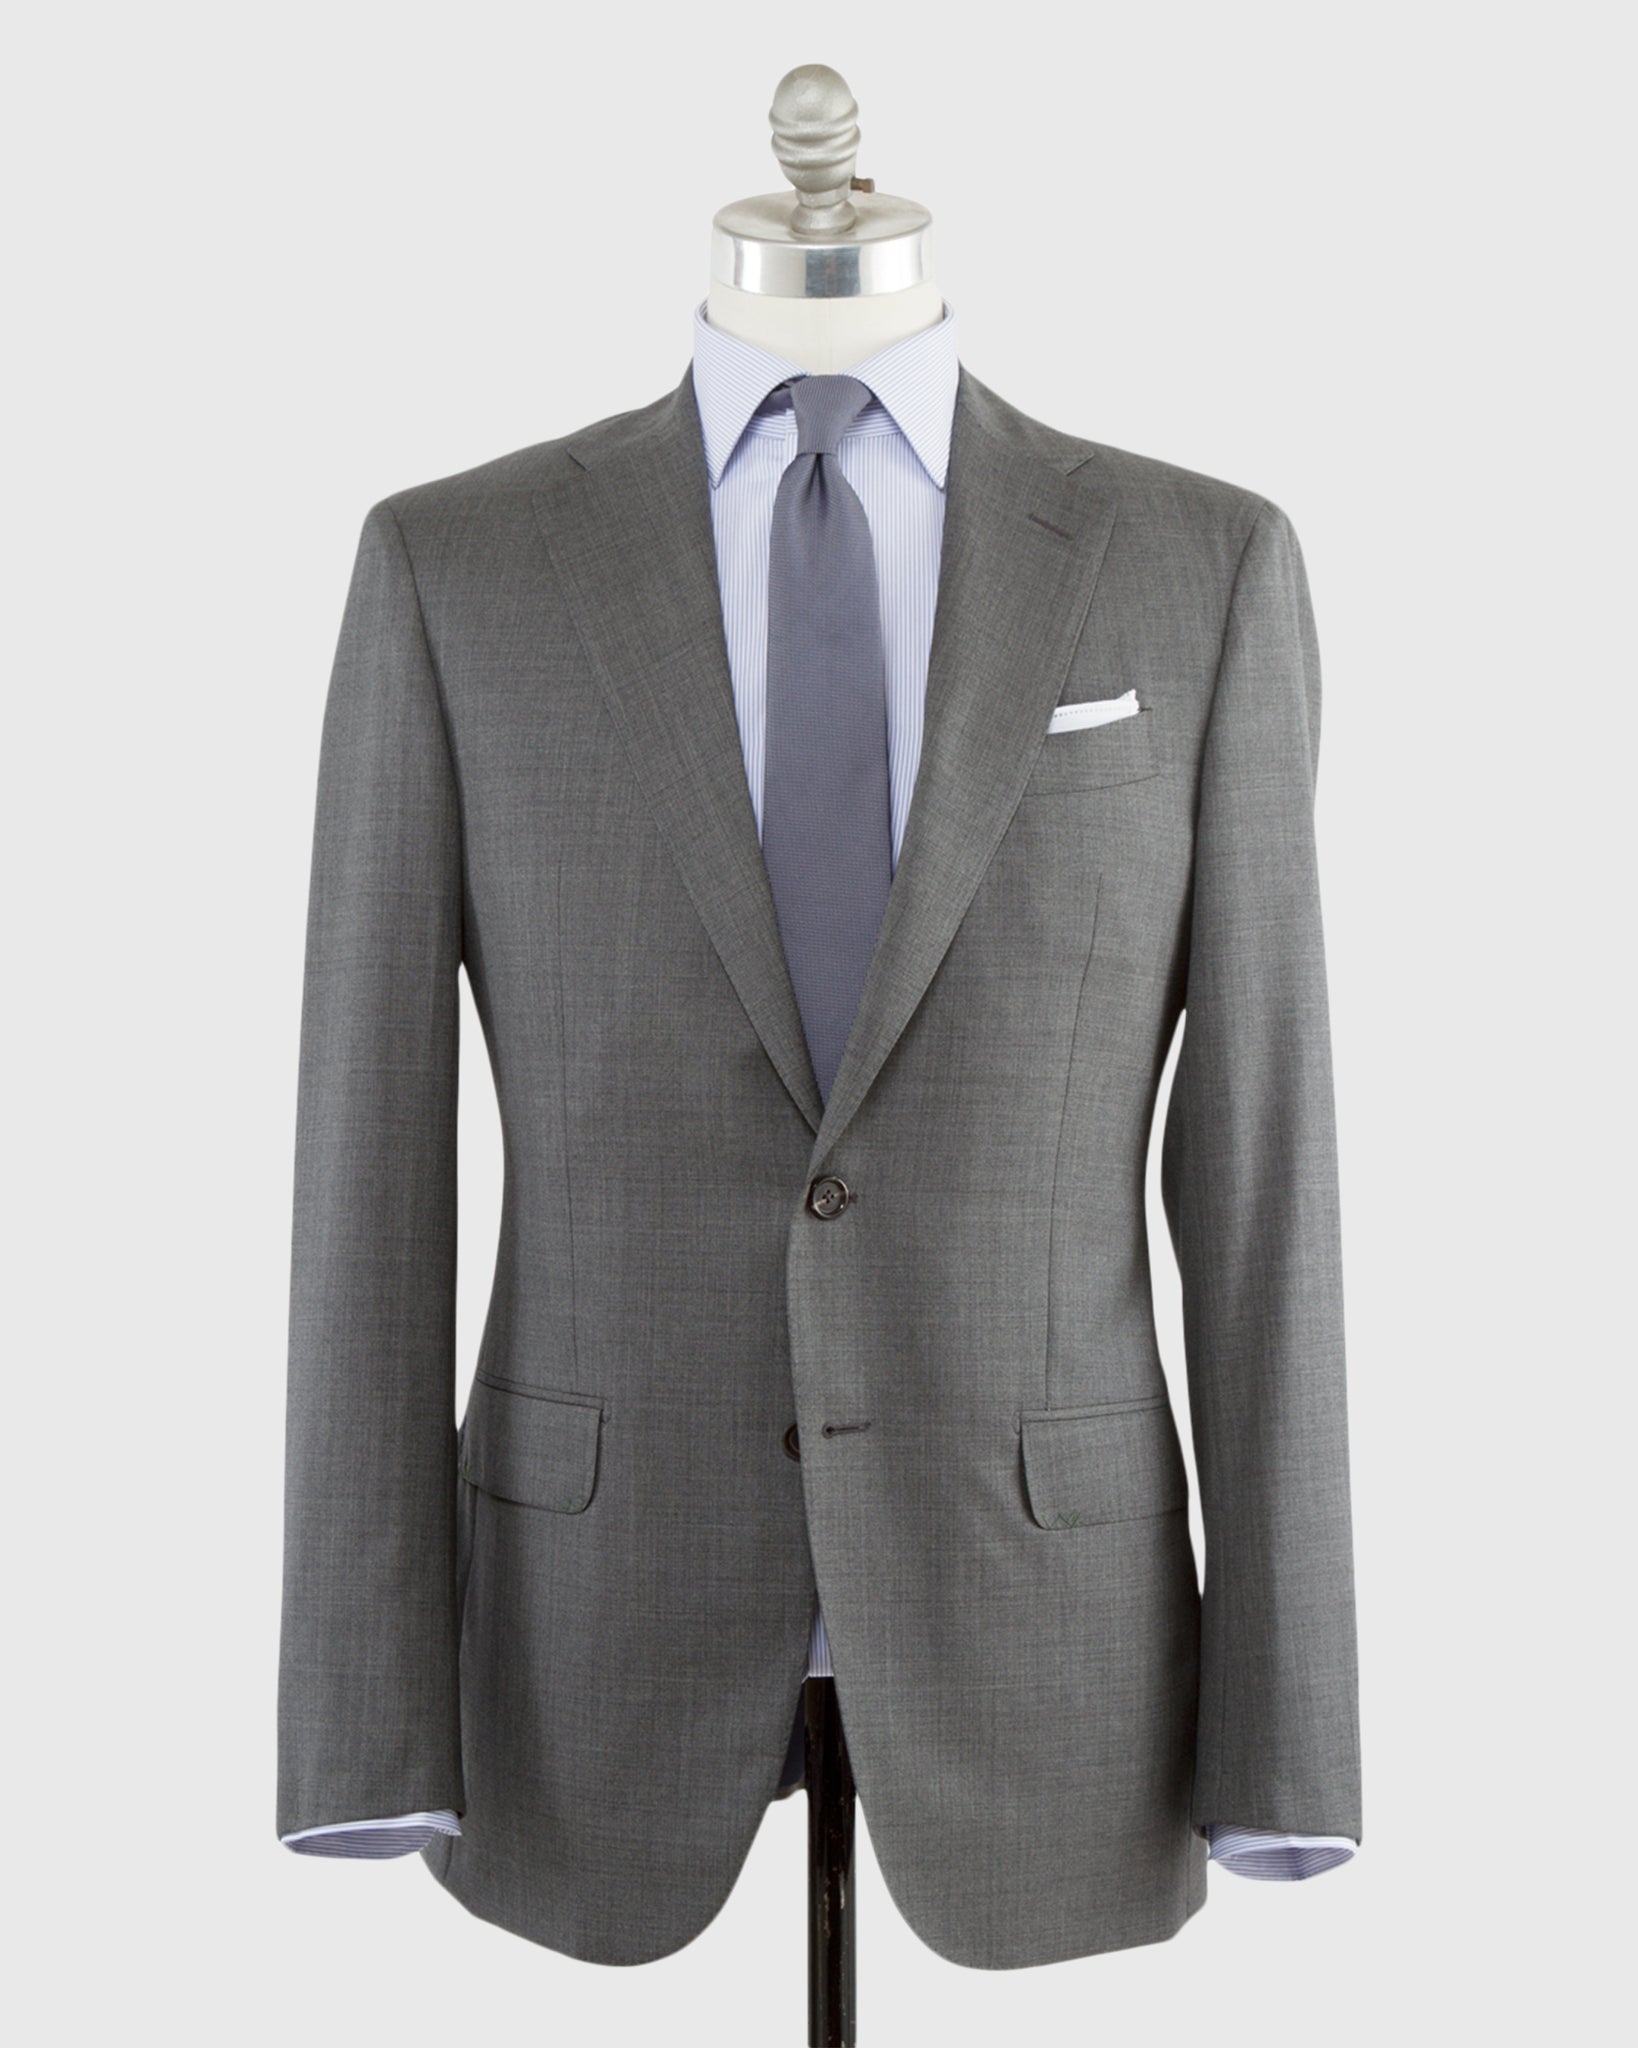 Kincaid No. 3 Suit Oxford Grey Sharkskin